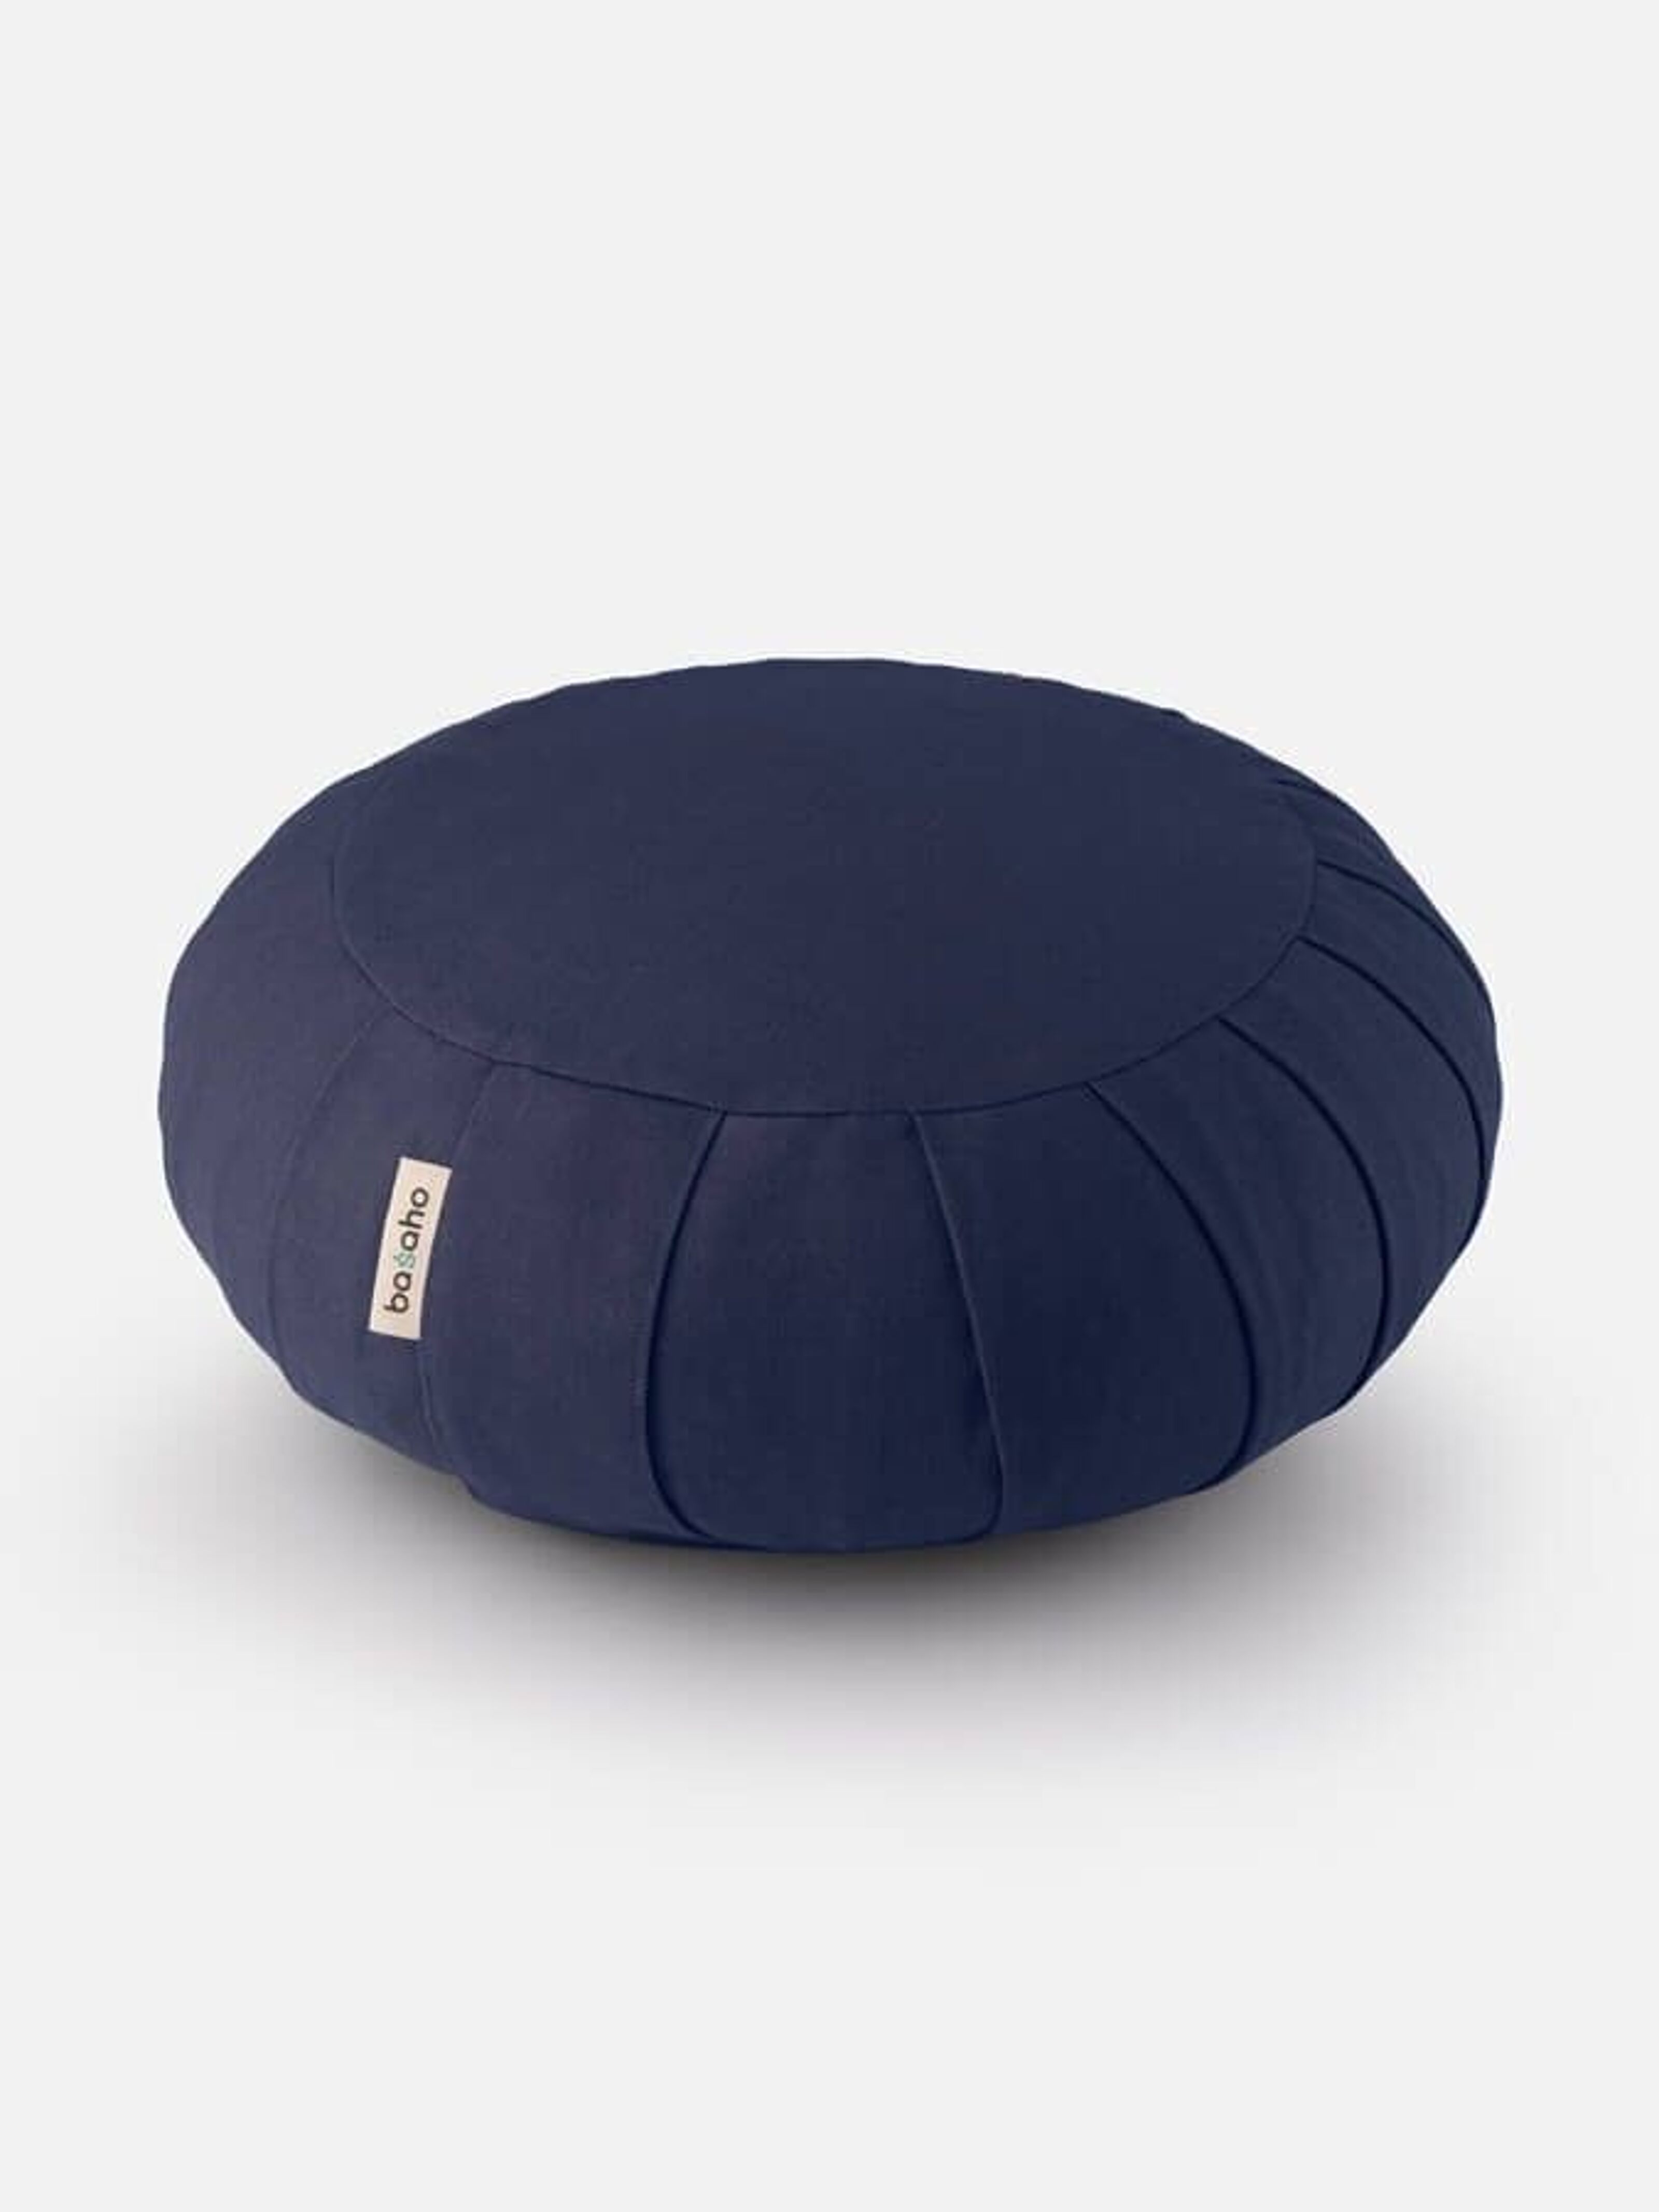 Buy wholesale Basaho Classic Zafu Meditation Cushion